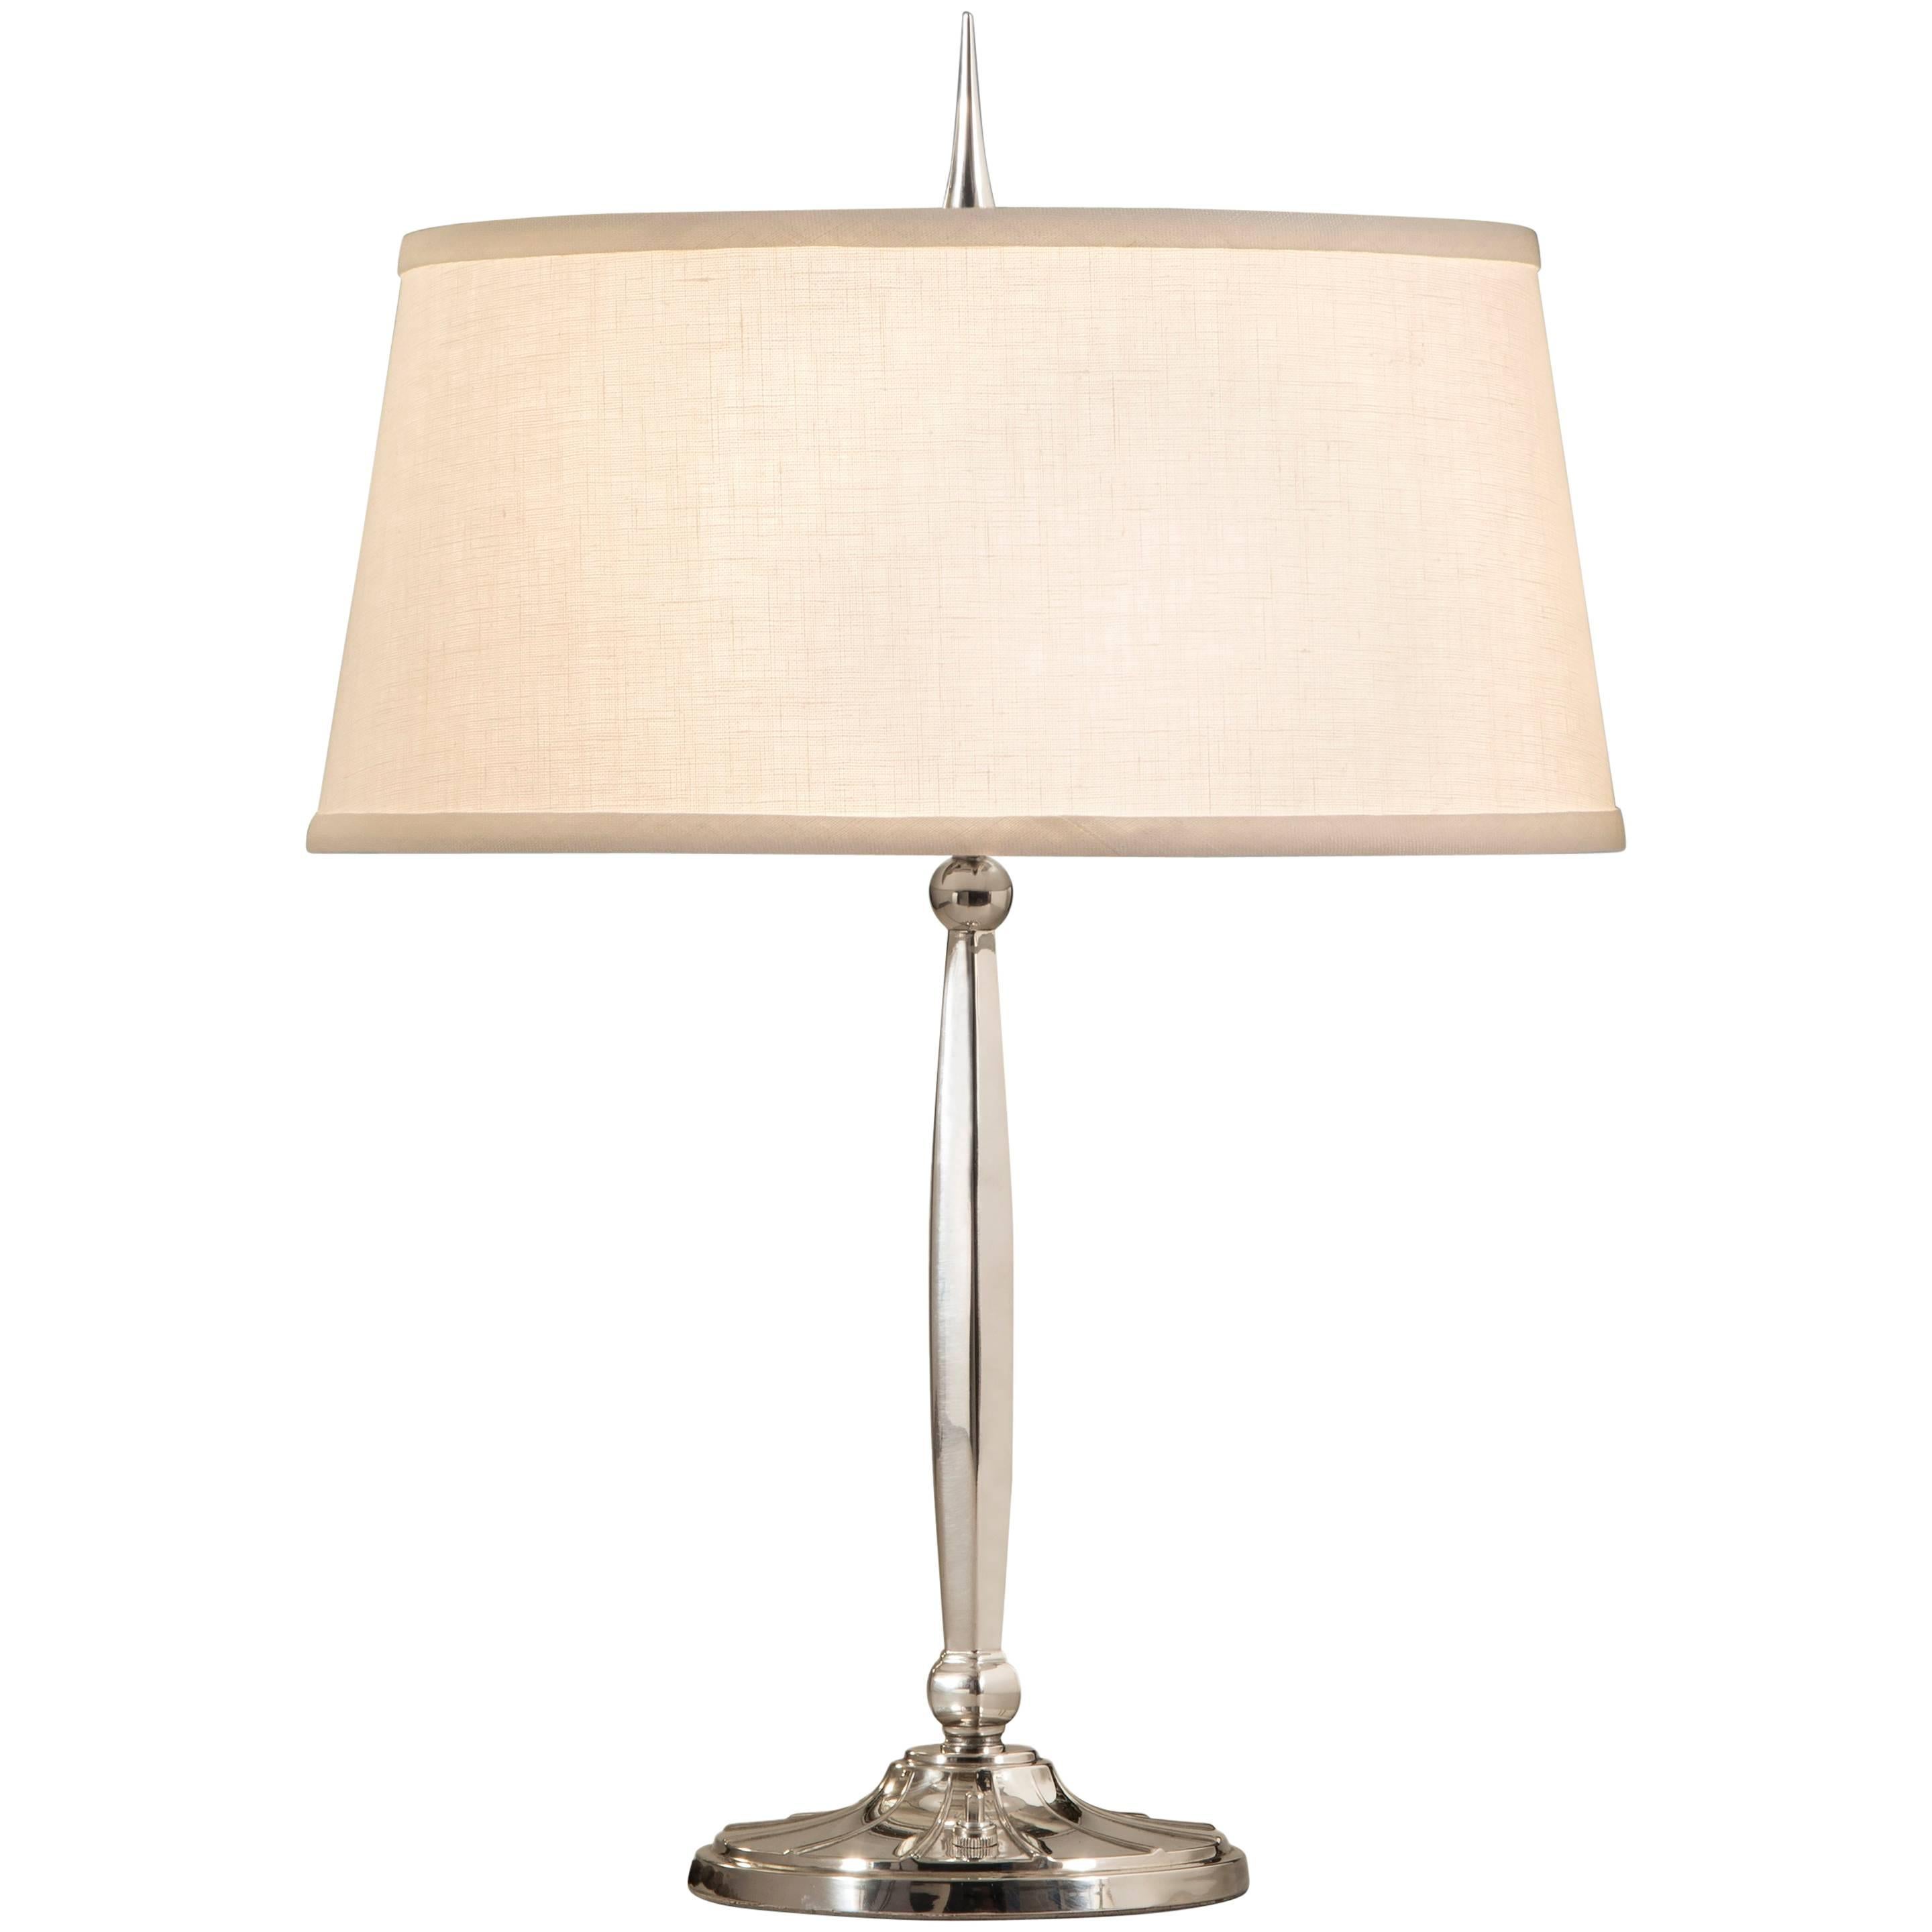 C.G. Hallberg, Small Swedish Grace Period Silvered Brass Table Lamp